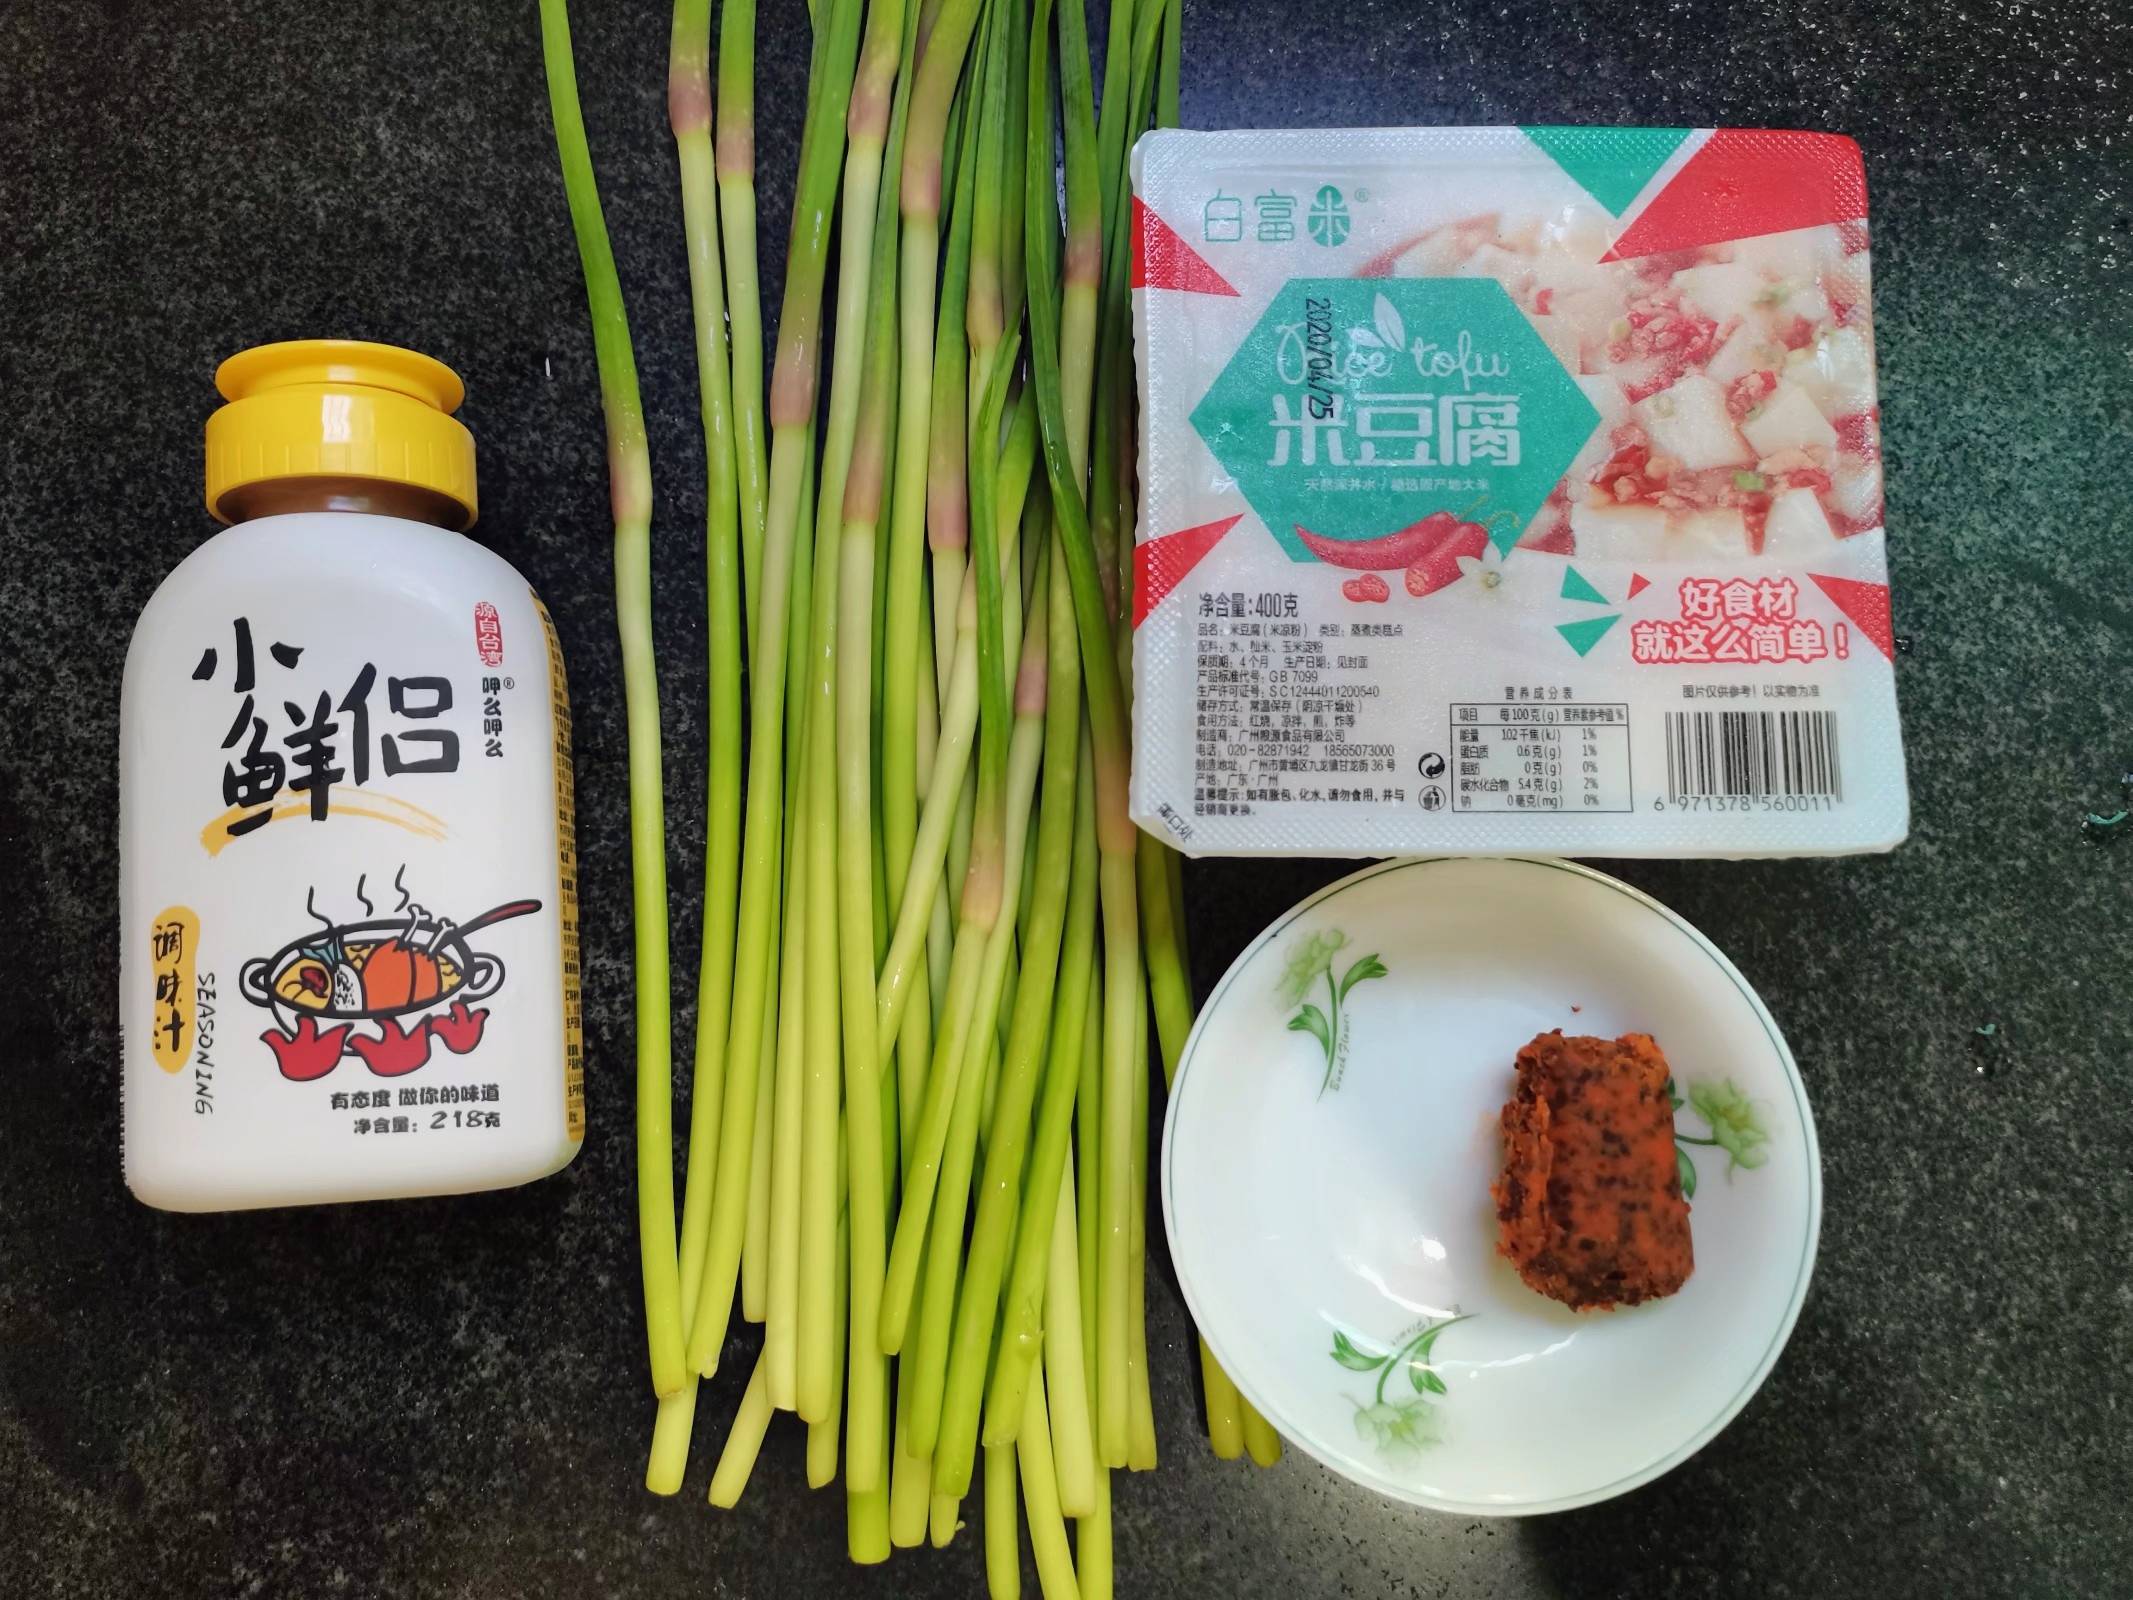 Garlic Moss. Rice Tofu Has Different Taste Buds recipe